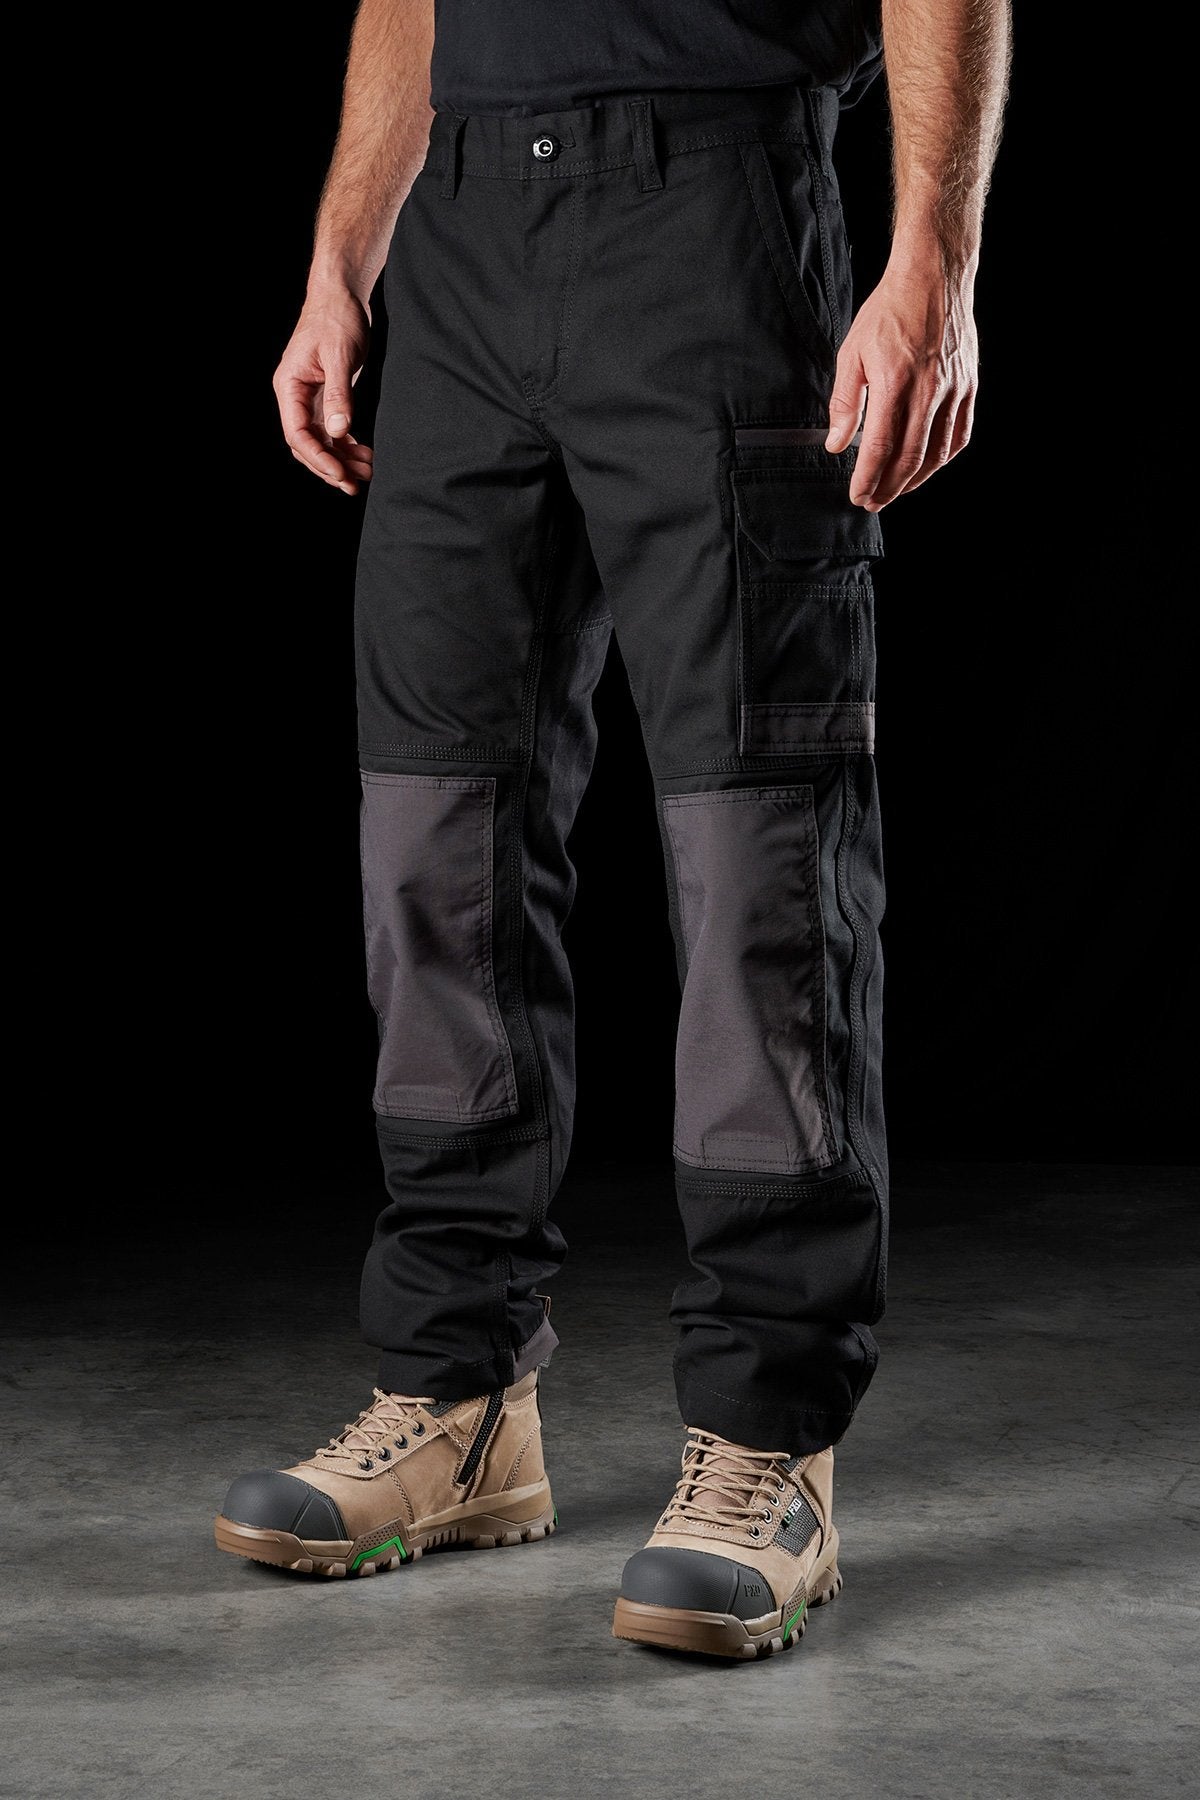 US Army Men's Combat Pants Military Gen3 Cargo Tactical Trouser G3 W/Knee  Pads | eBay